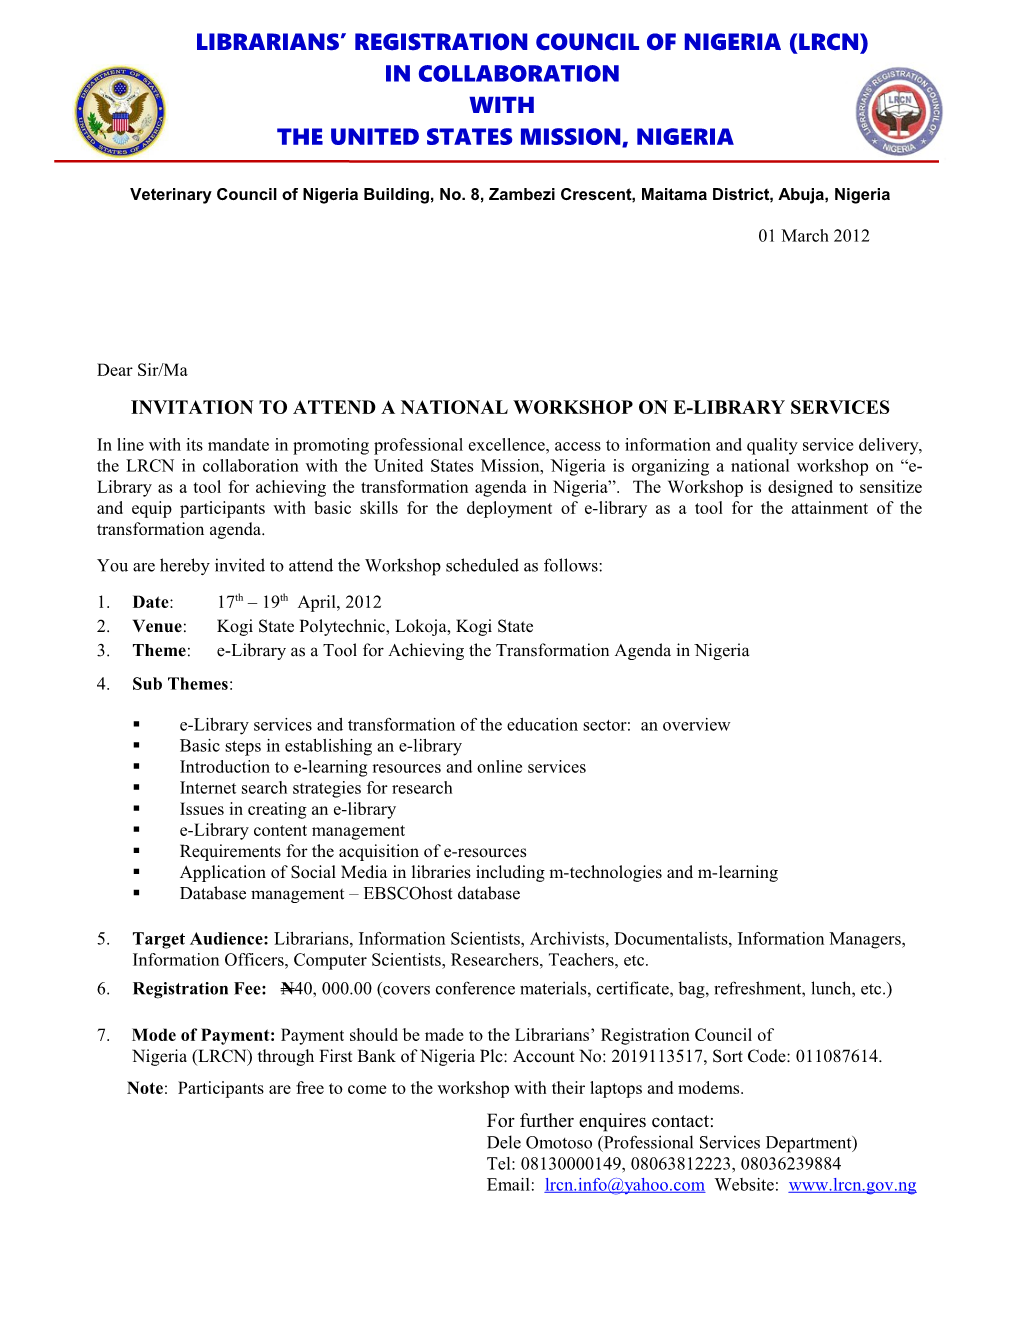 Librarians Registration Council of Nigeria (Lrcn)